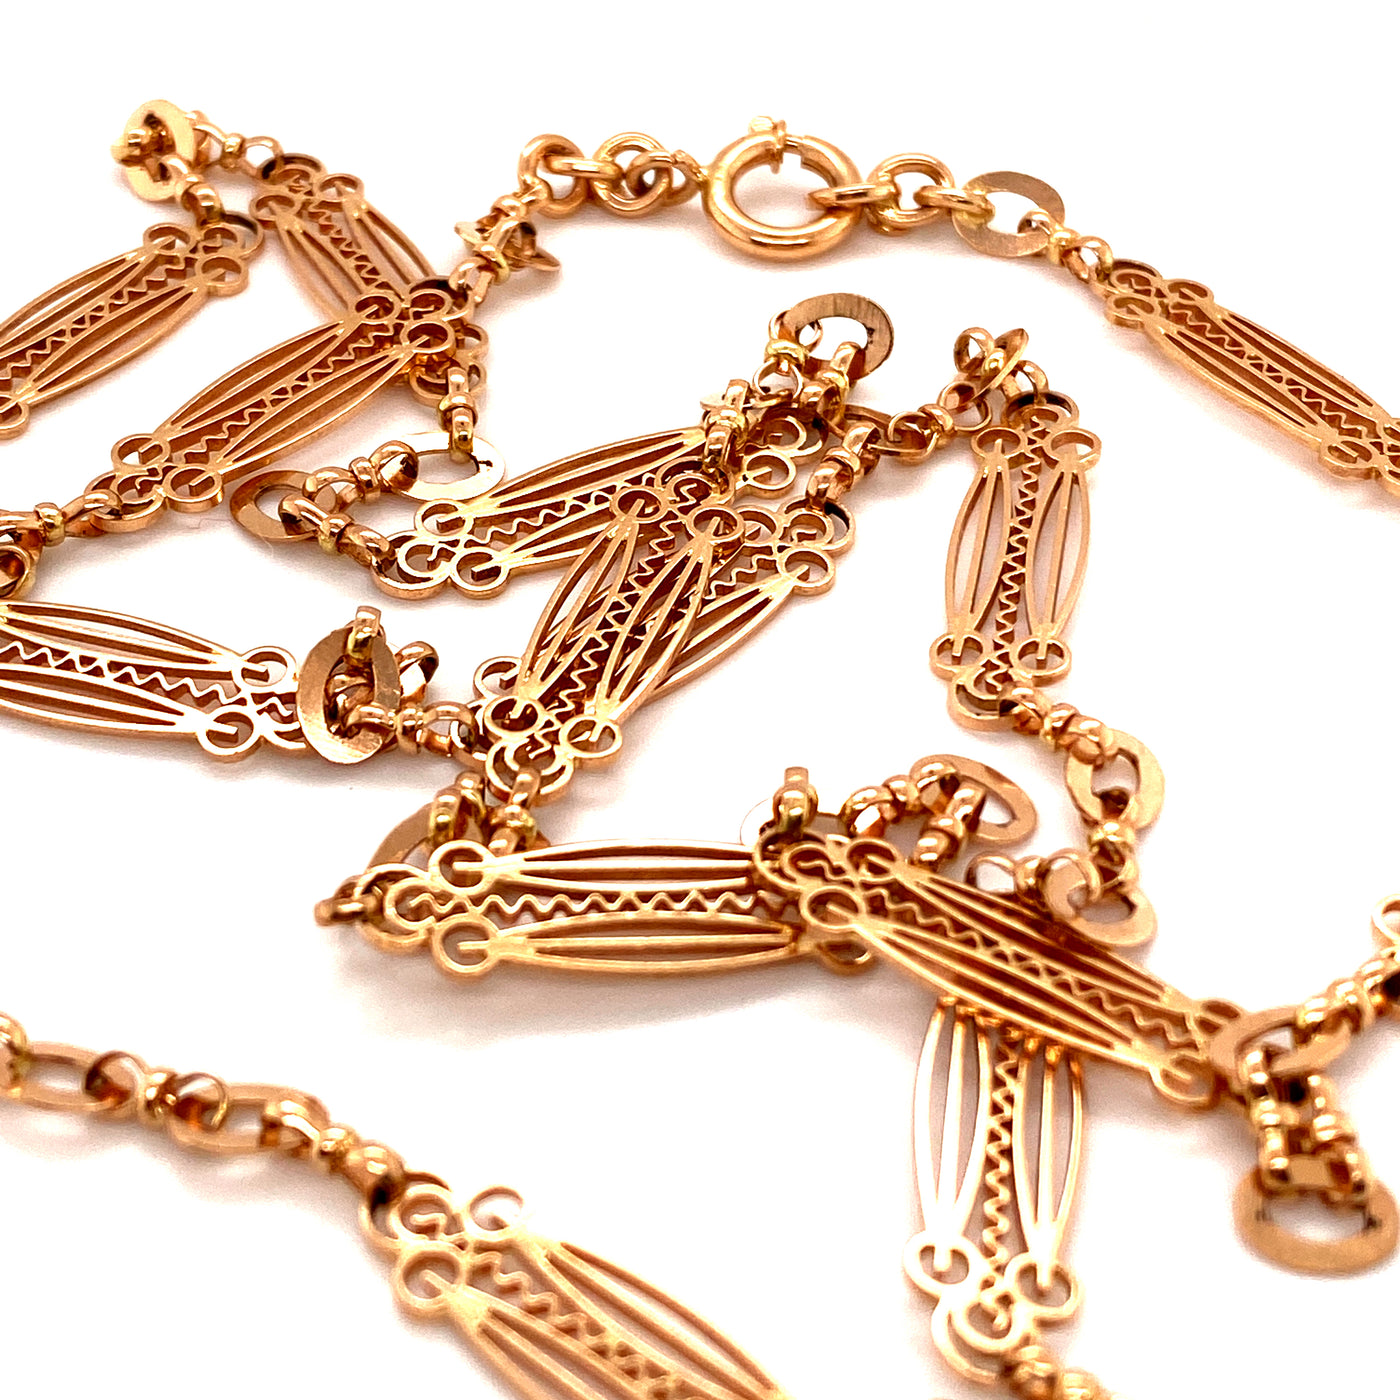 Patterns of Gold - Goldkette Roségold Unikat